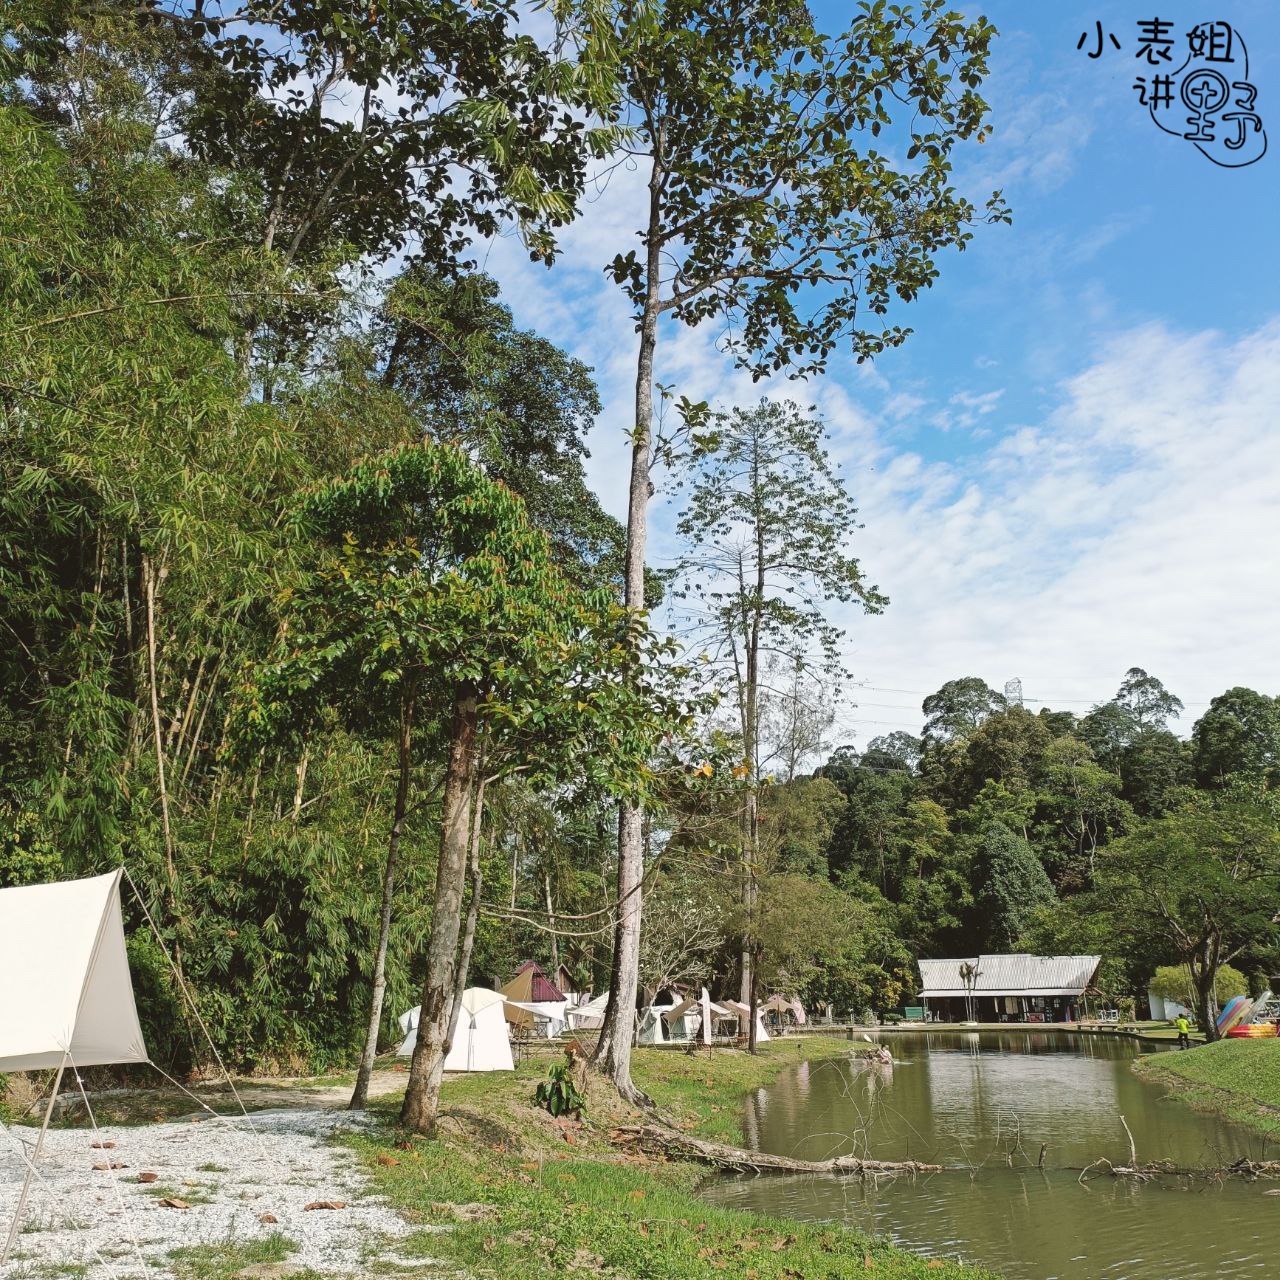 「Lubar 露吧」在Resort Taman Rimba Komanwel Rawang 的营地。